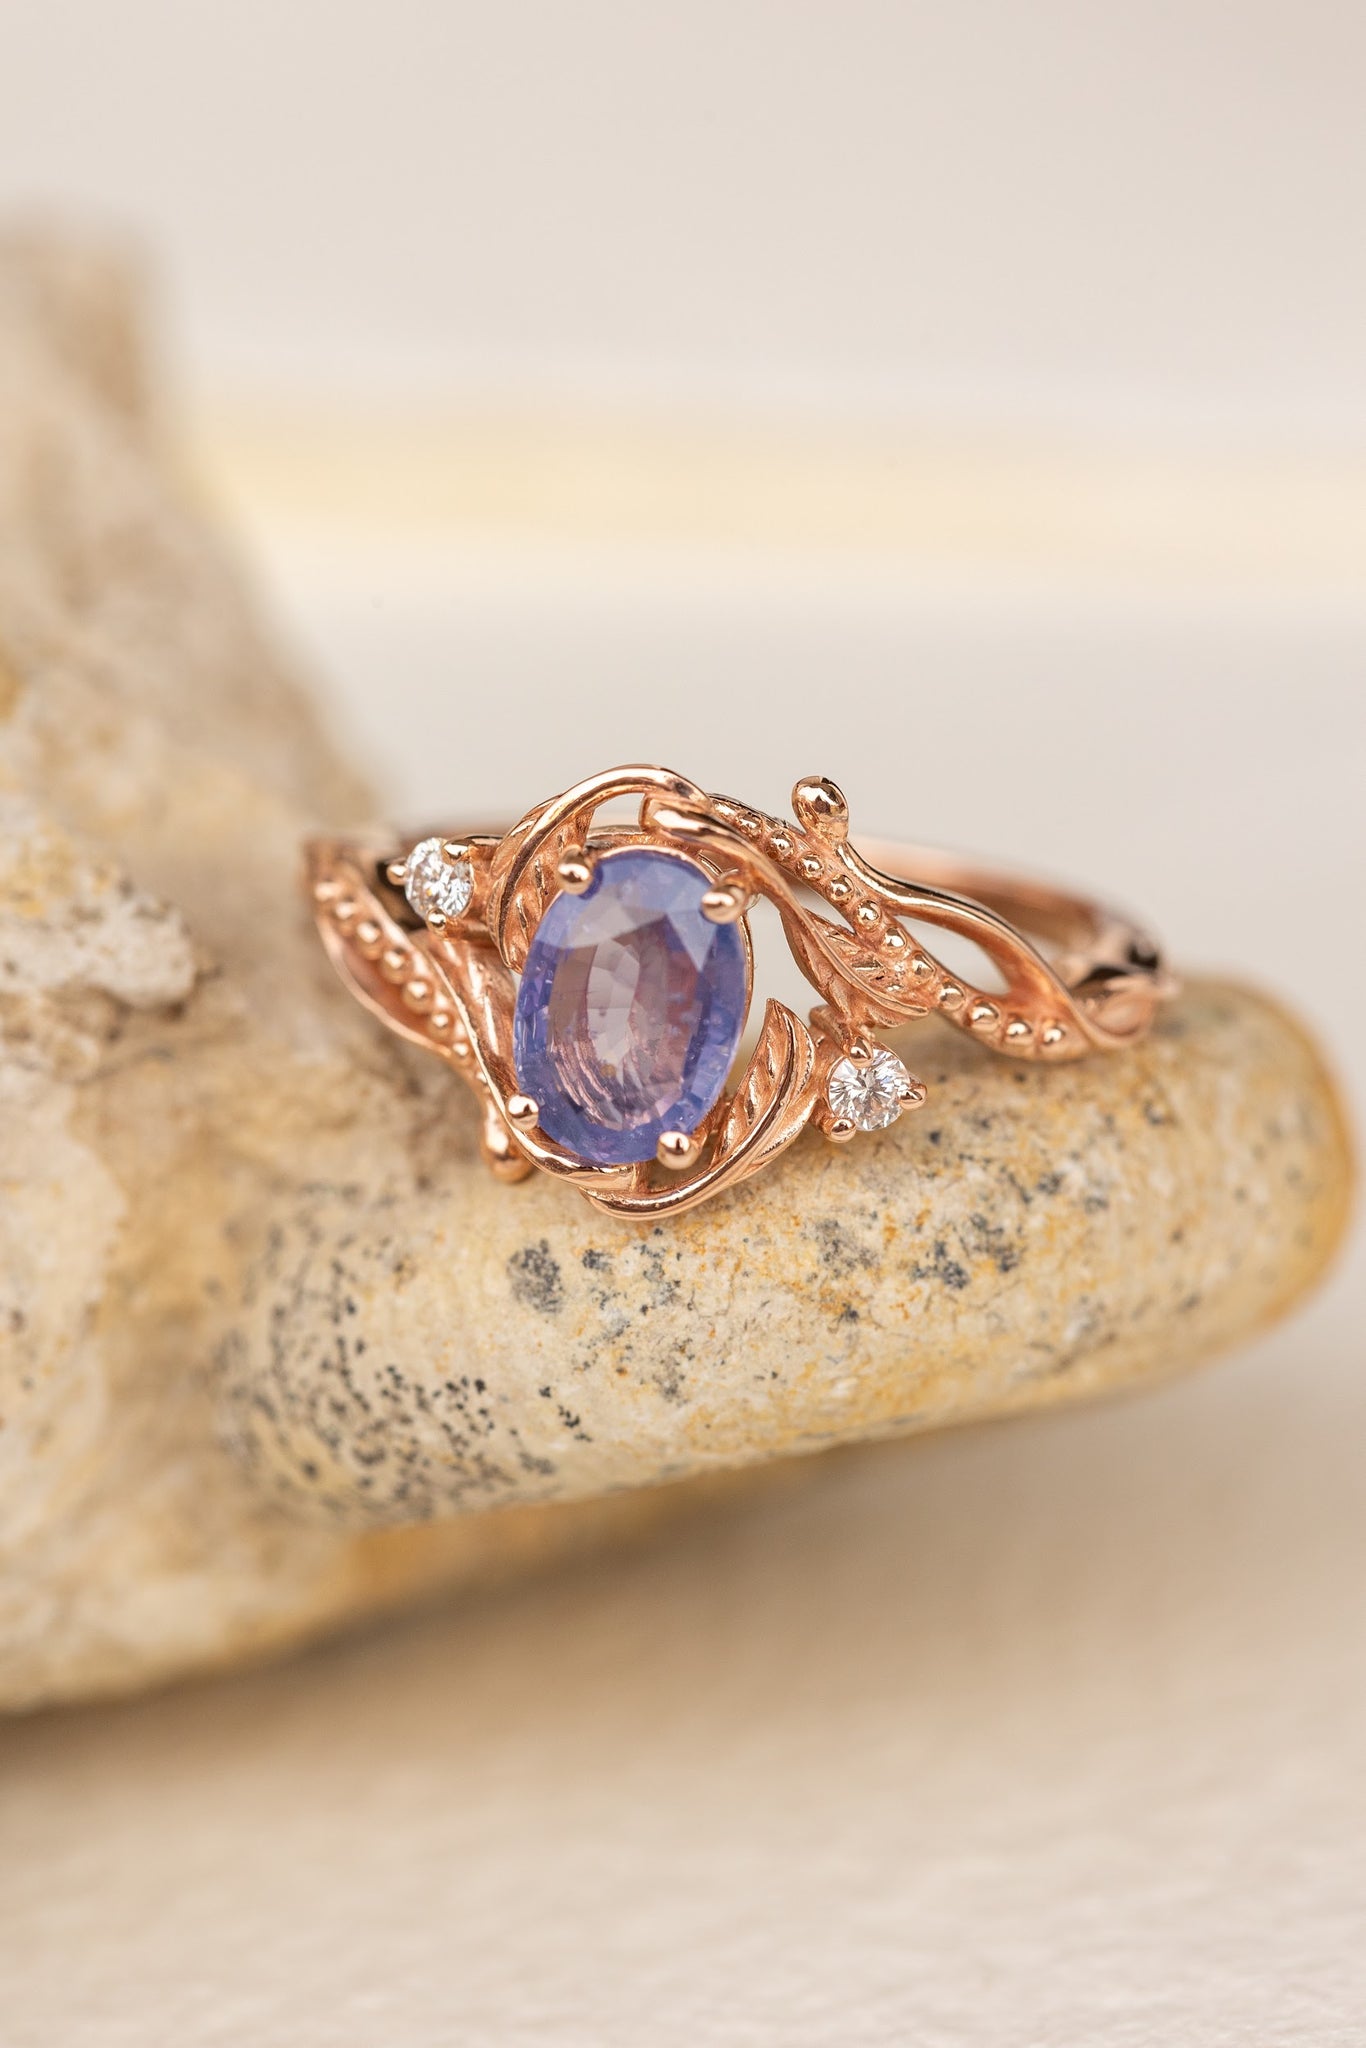 Mermaid violet natural sapphire engagement ring, rose gold engagement ring with sapphire and diamonds / Undina - Eden Garden Jewelry™